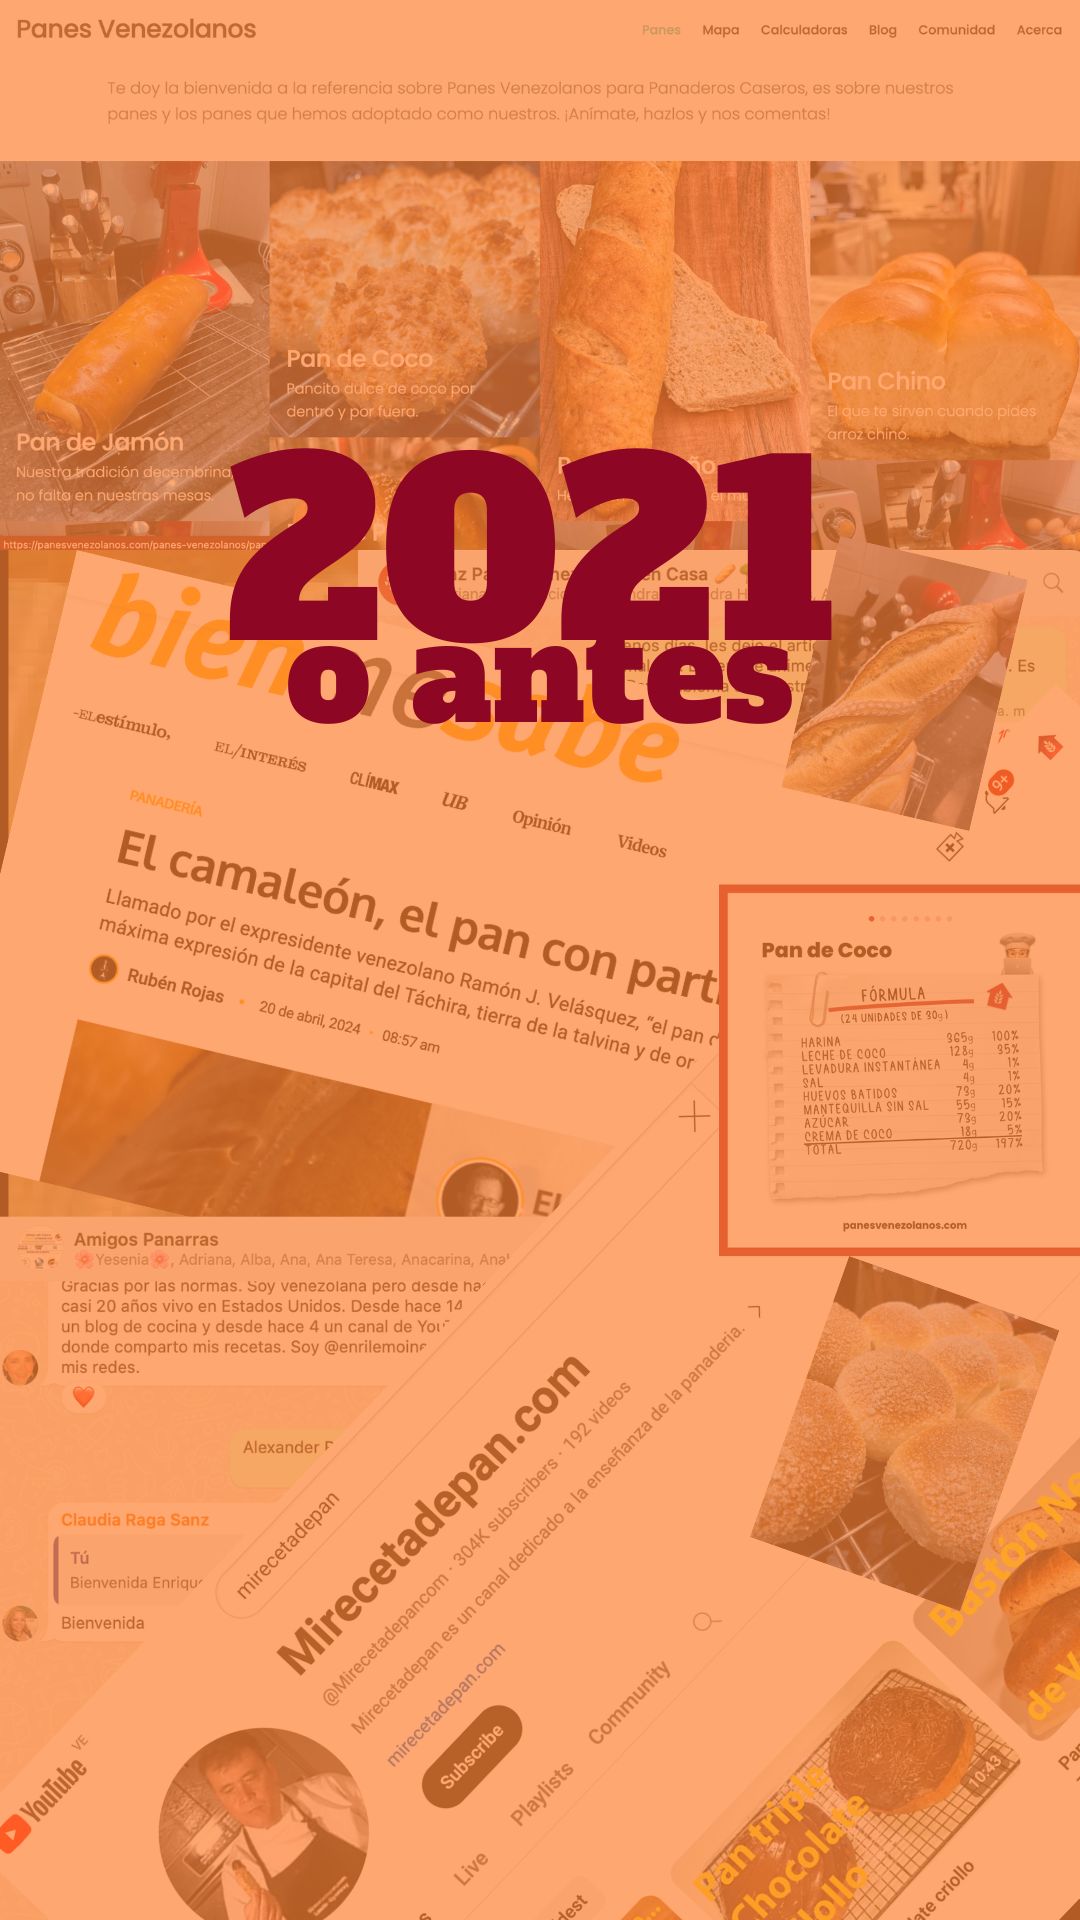 Bitácora de referencias sobre Panadería Venezolana 2021 o antes